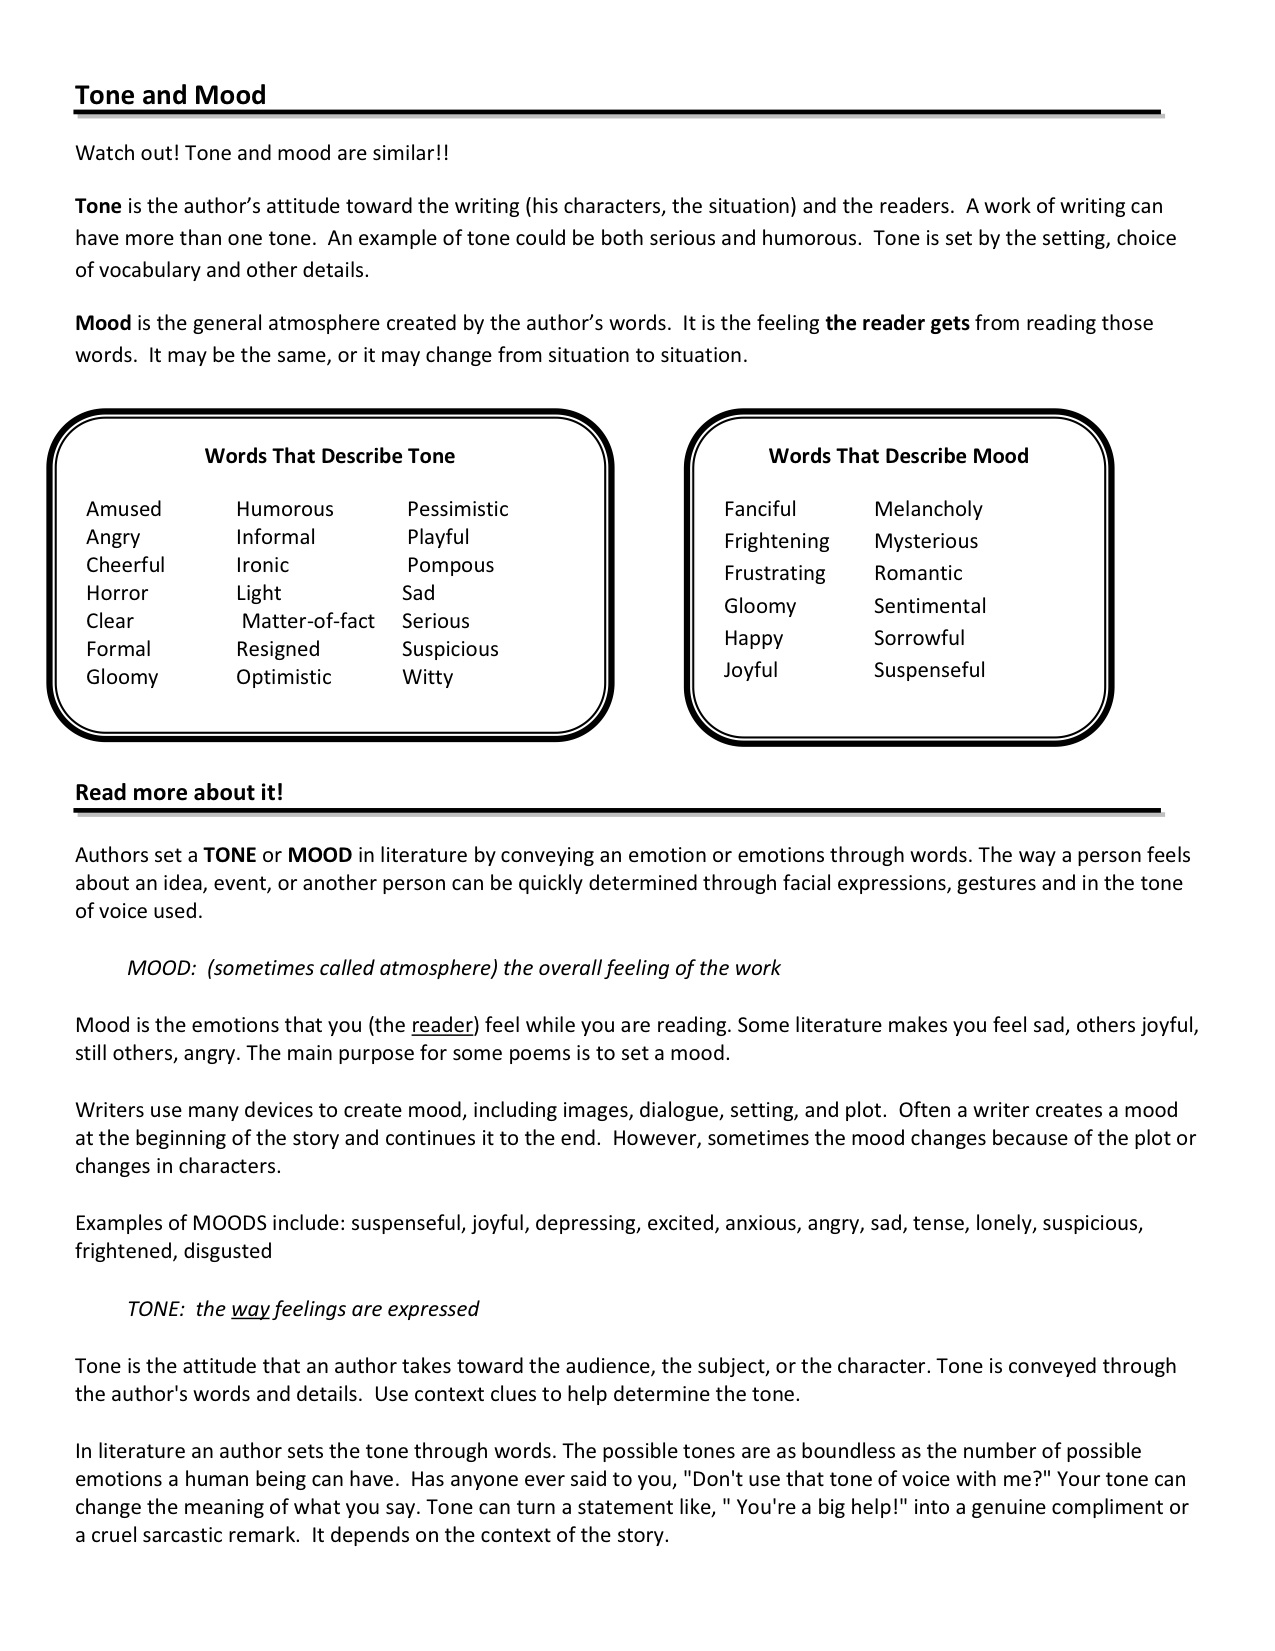 Identifying Tone And Mood Worksheet The Best Worksheets Image